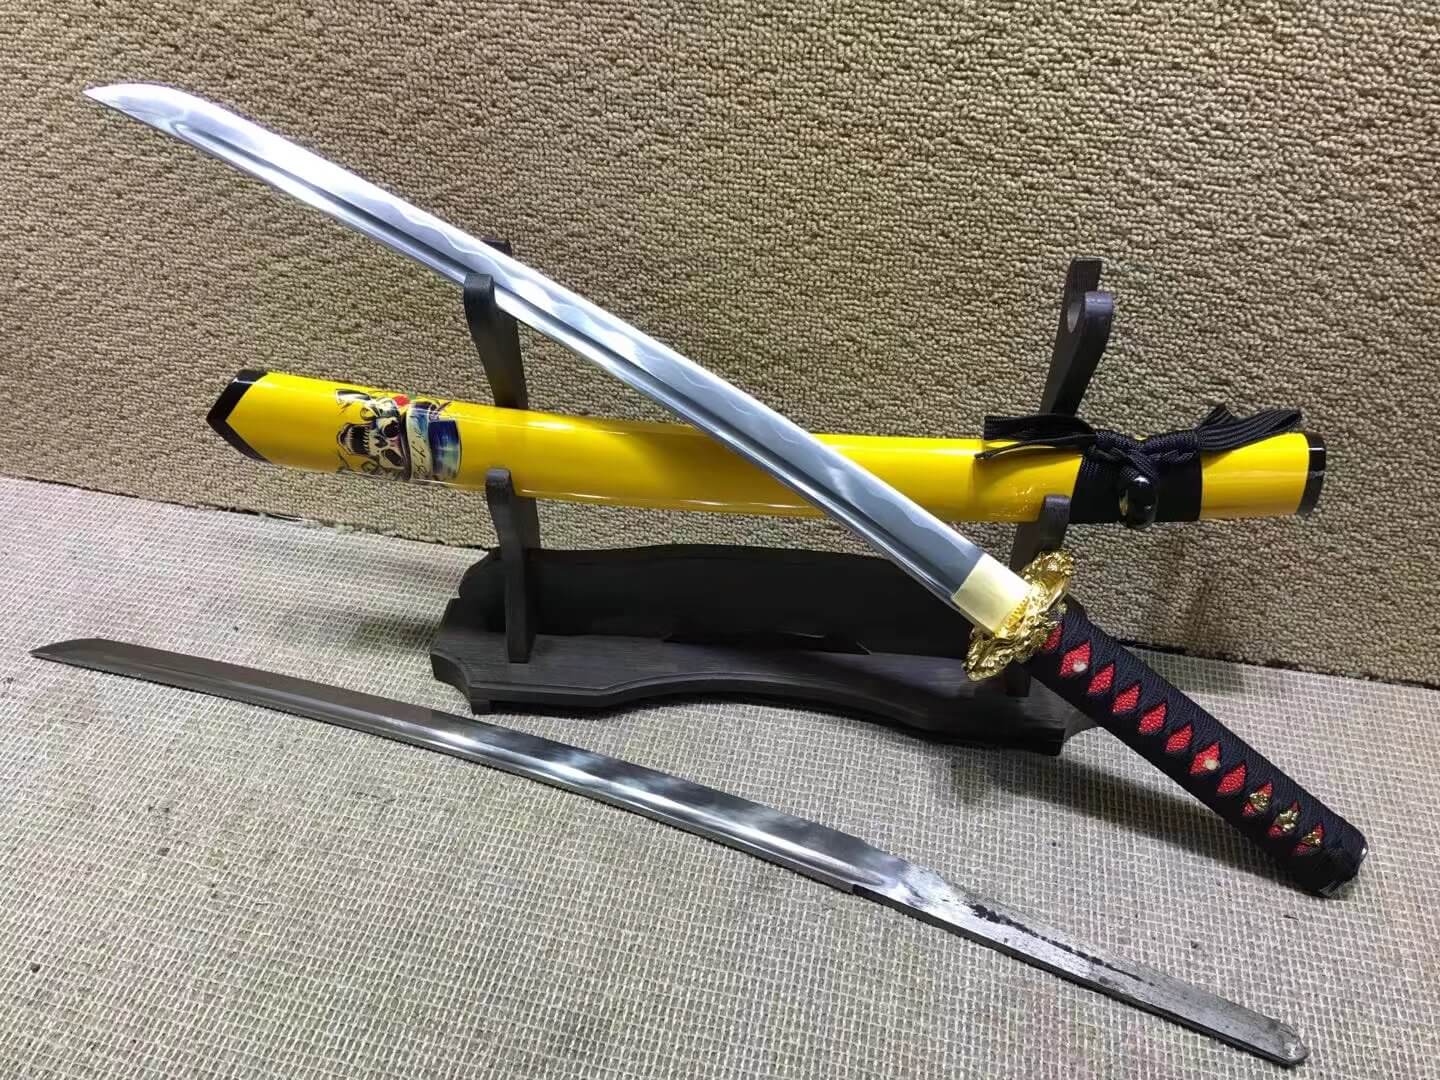 Samurai sword,Medium carbon steel,Yellow scabbard,Alloy Tsuba,Length 30 inch - Chinese sword shop